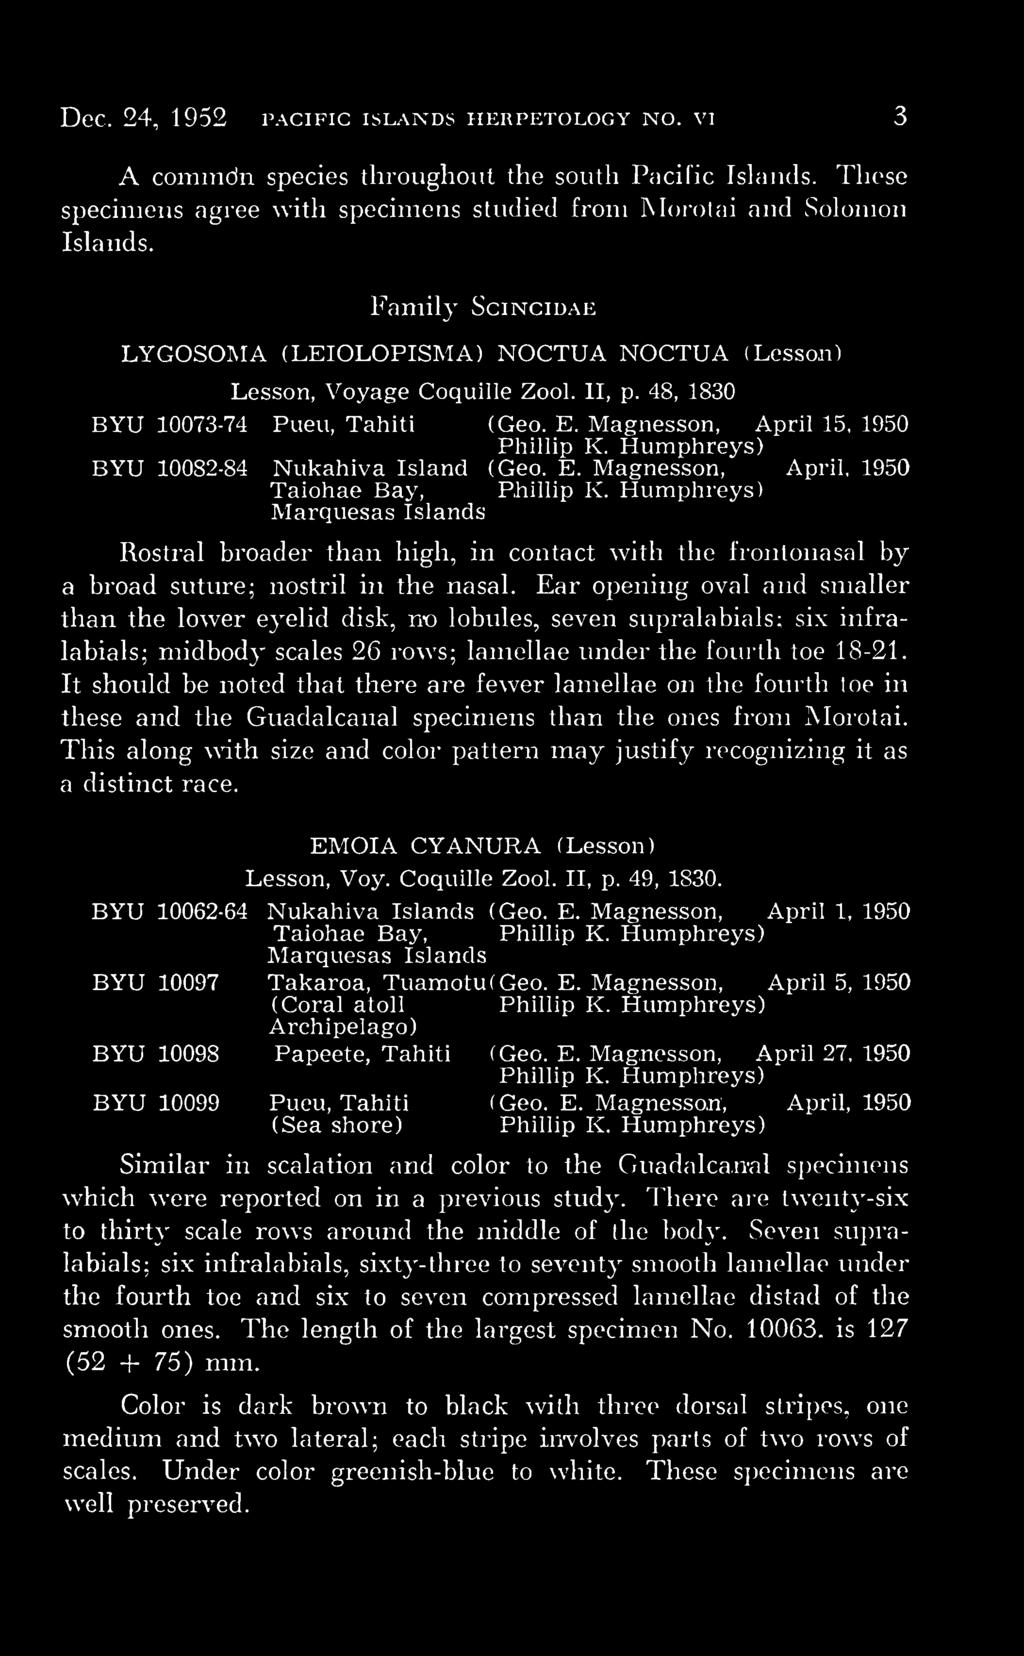 Magnesson, April 15, 1950 BYU 10082-84 Nukahiva Island (Geo. E.